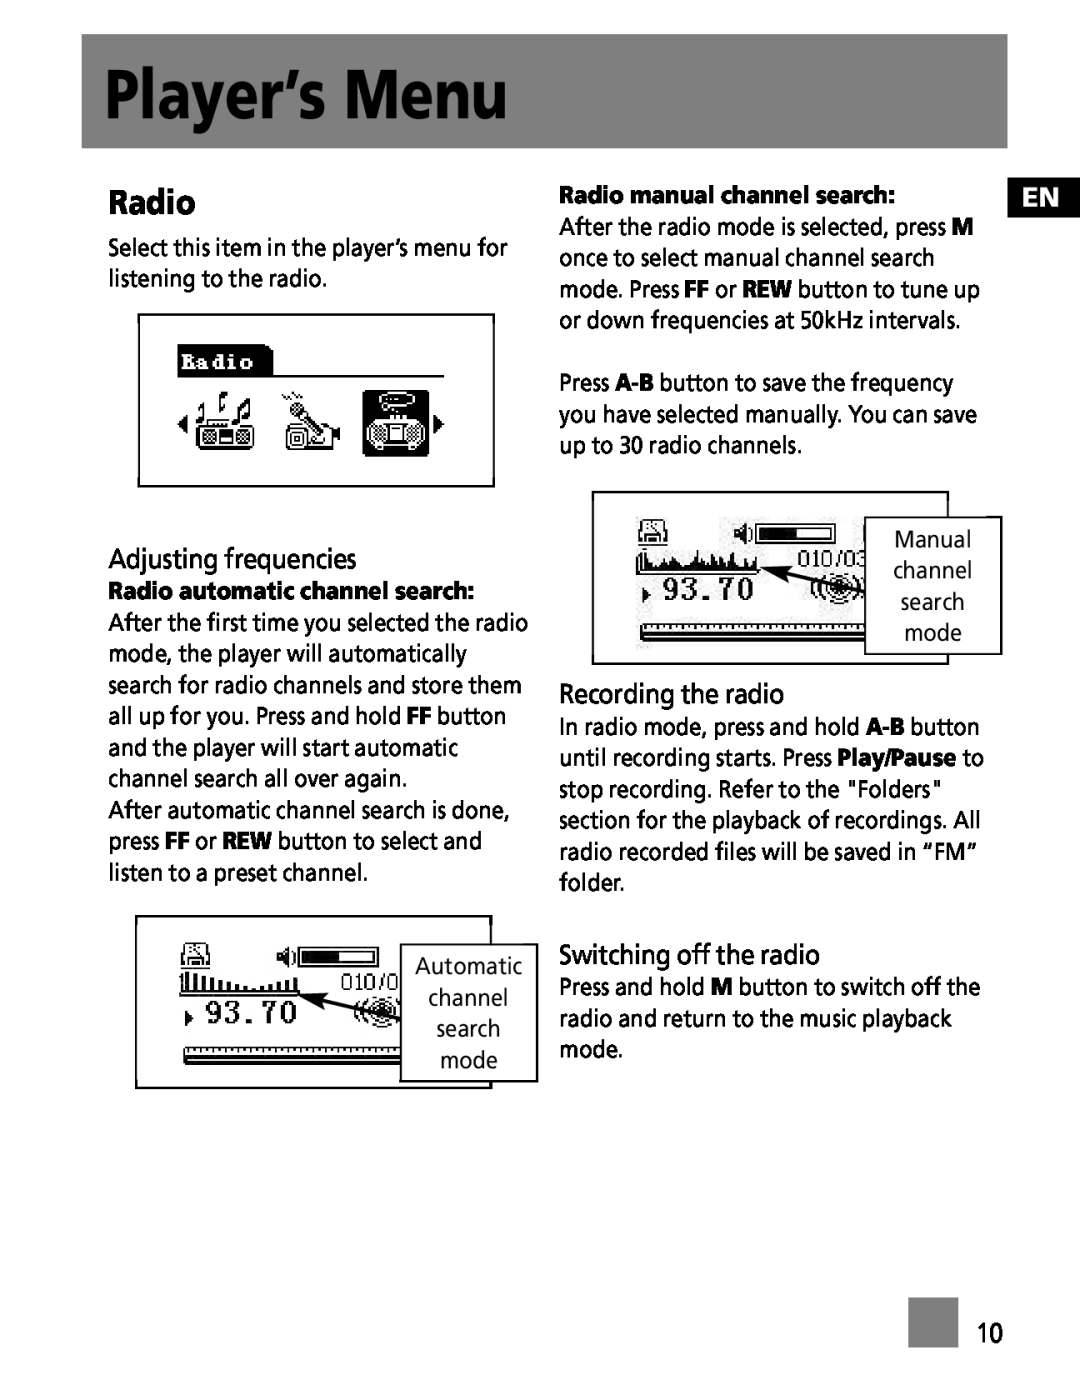 RCA M3001, M3000, MC3001, MC3000 Player’s Menu, Radio, Adjusting frequencies, Recording the radio, Switching off the radio 